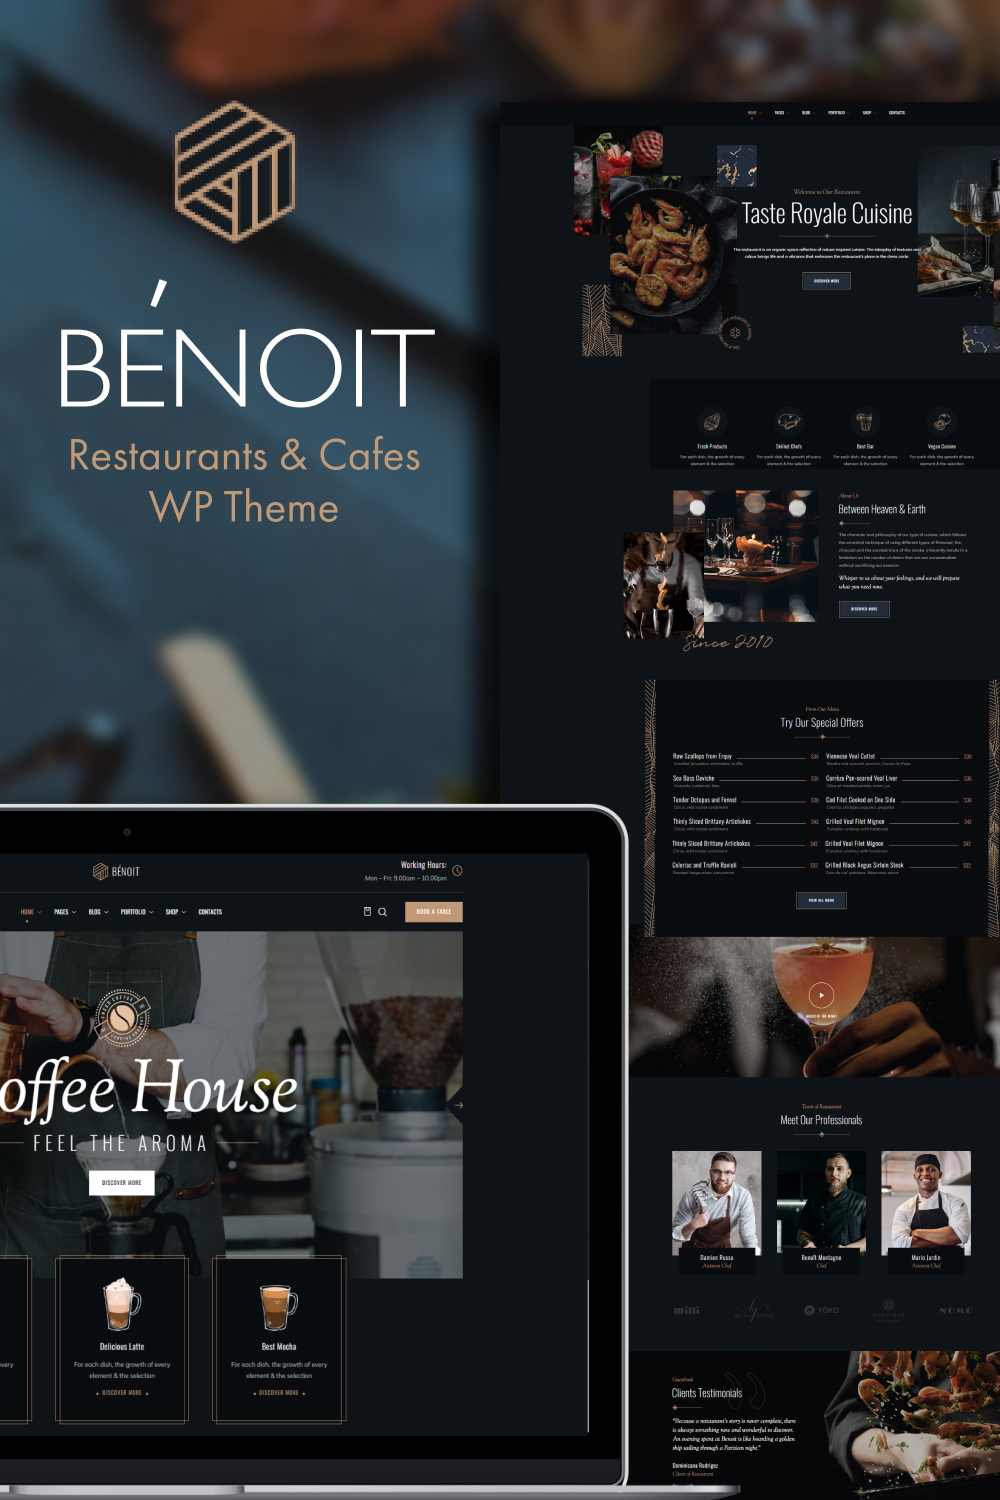 Pinterest illustrations of benoit restaurants cafes wordpress theme.